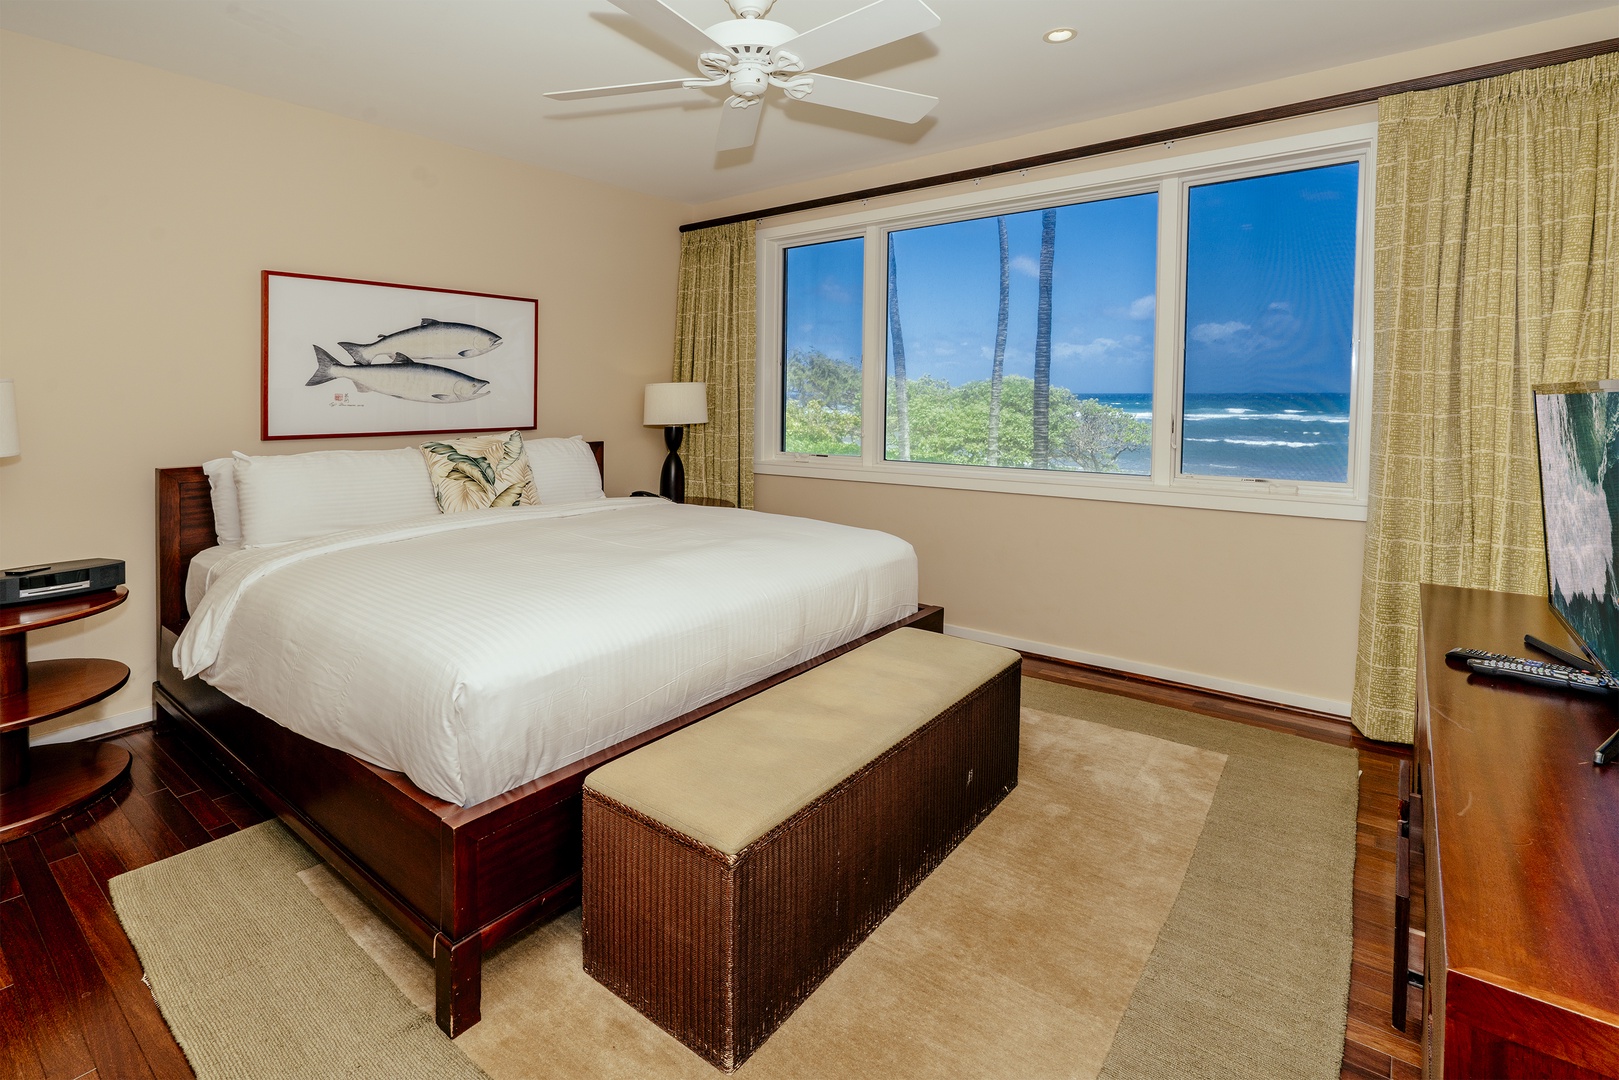 Kahuku Vacation Rentals, OFB Turtle Bay Villas 216 - Your spacious primary bedroom.